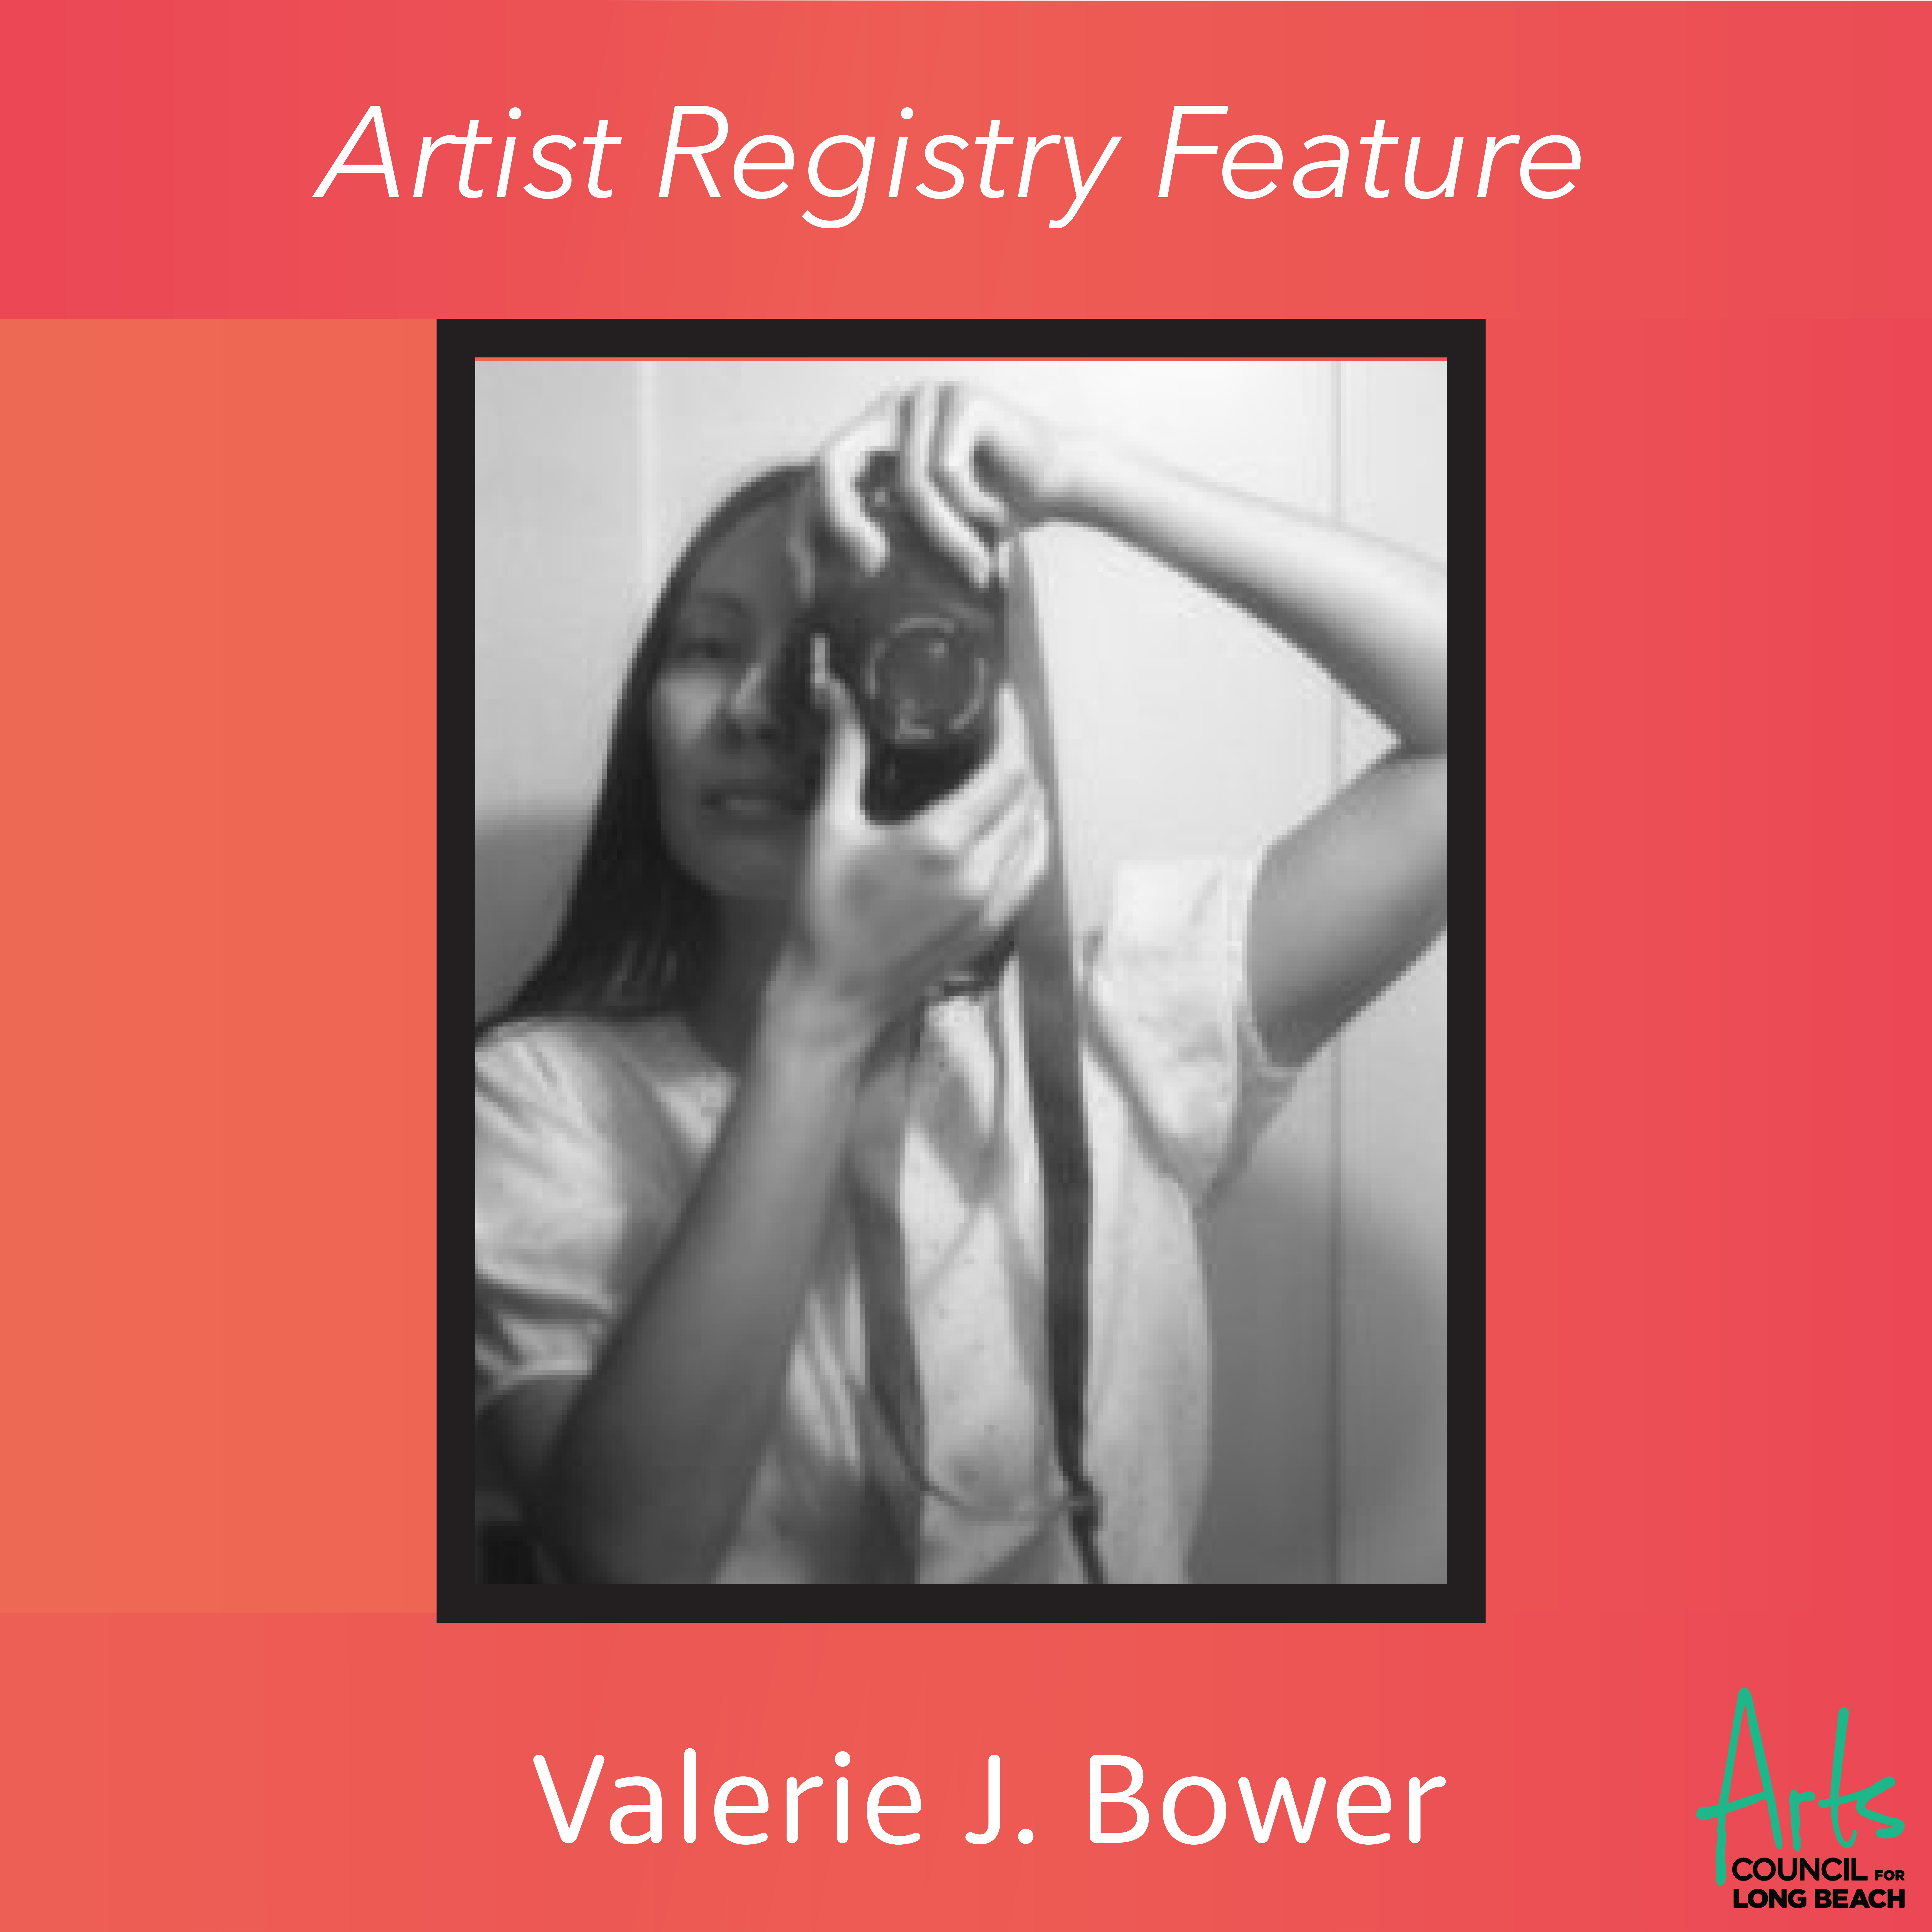 Artist Registry Feature: Valerie J. Bower